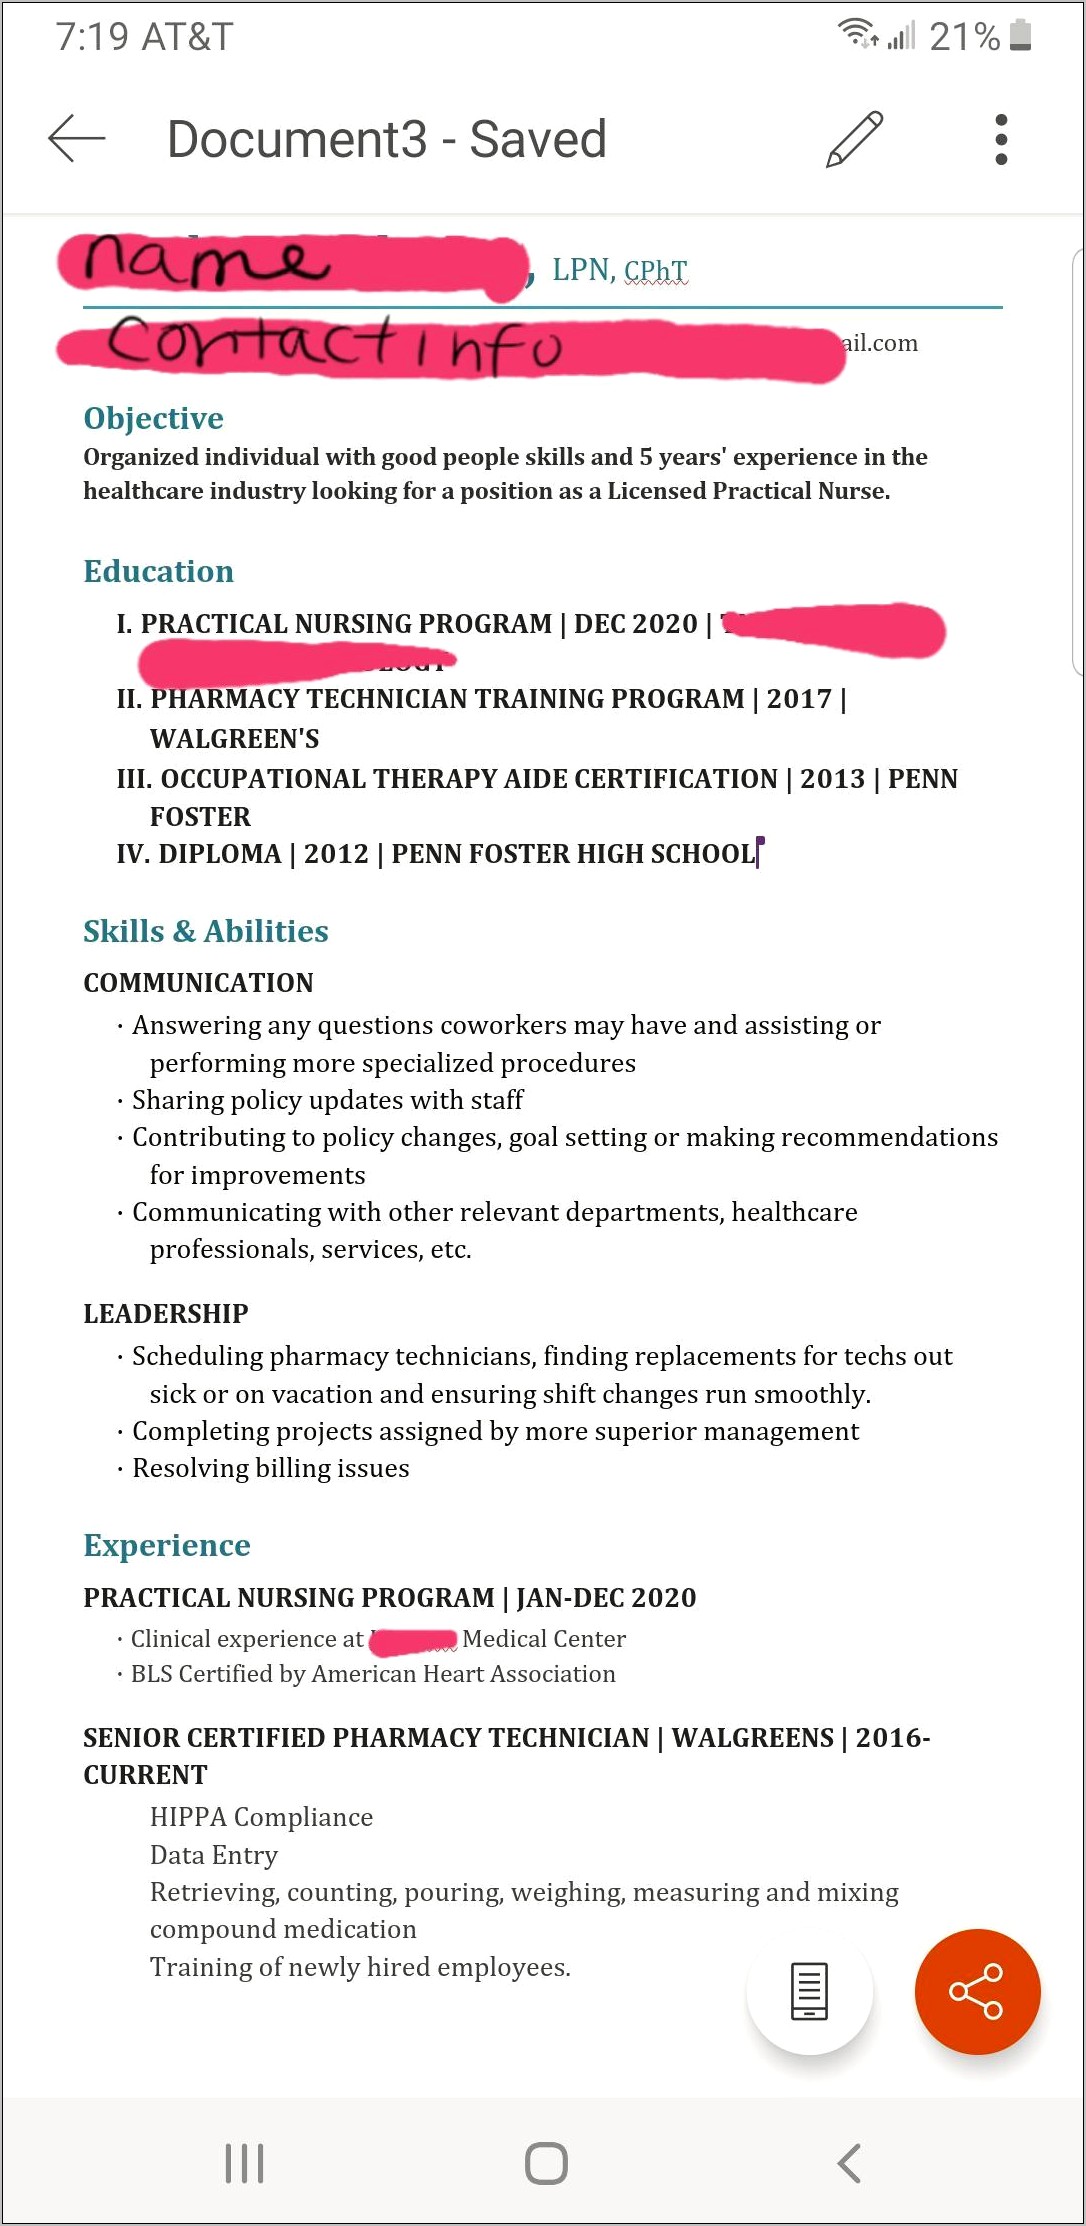 Resume Cover Letter For Lpn Position